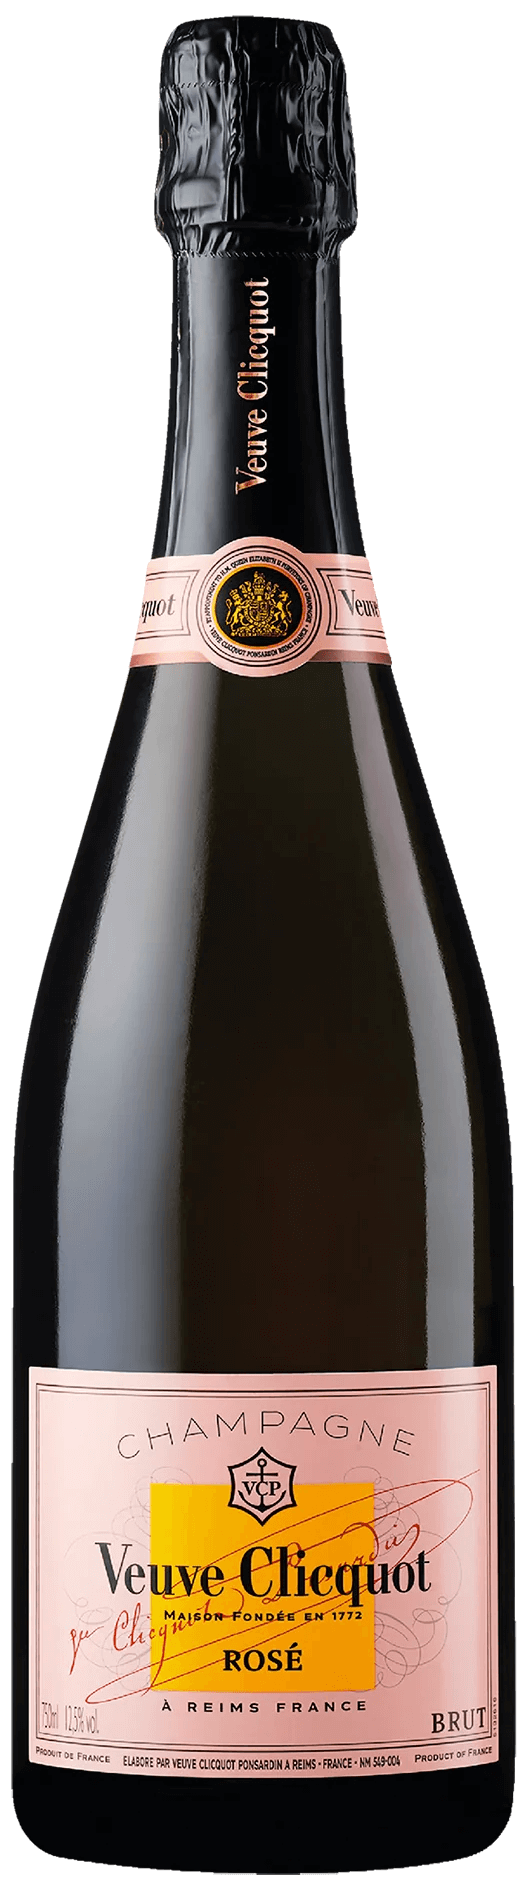 An image of a bottle of Veuve Clicquot Brut Rosé Champagne, 750ml